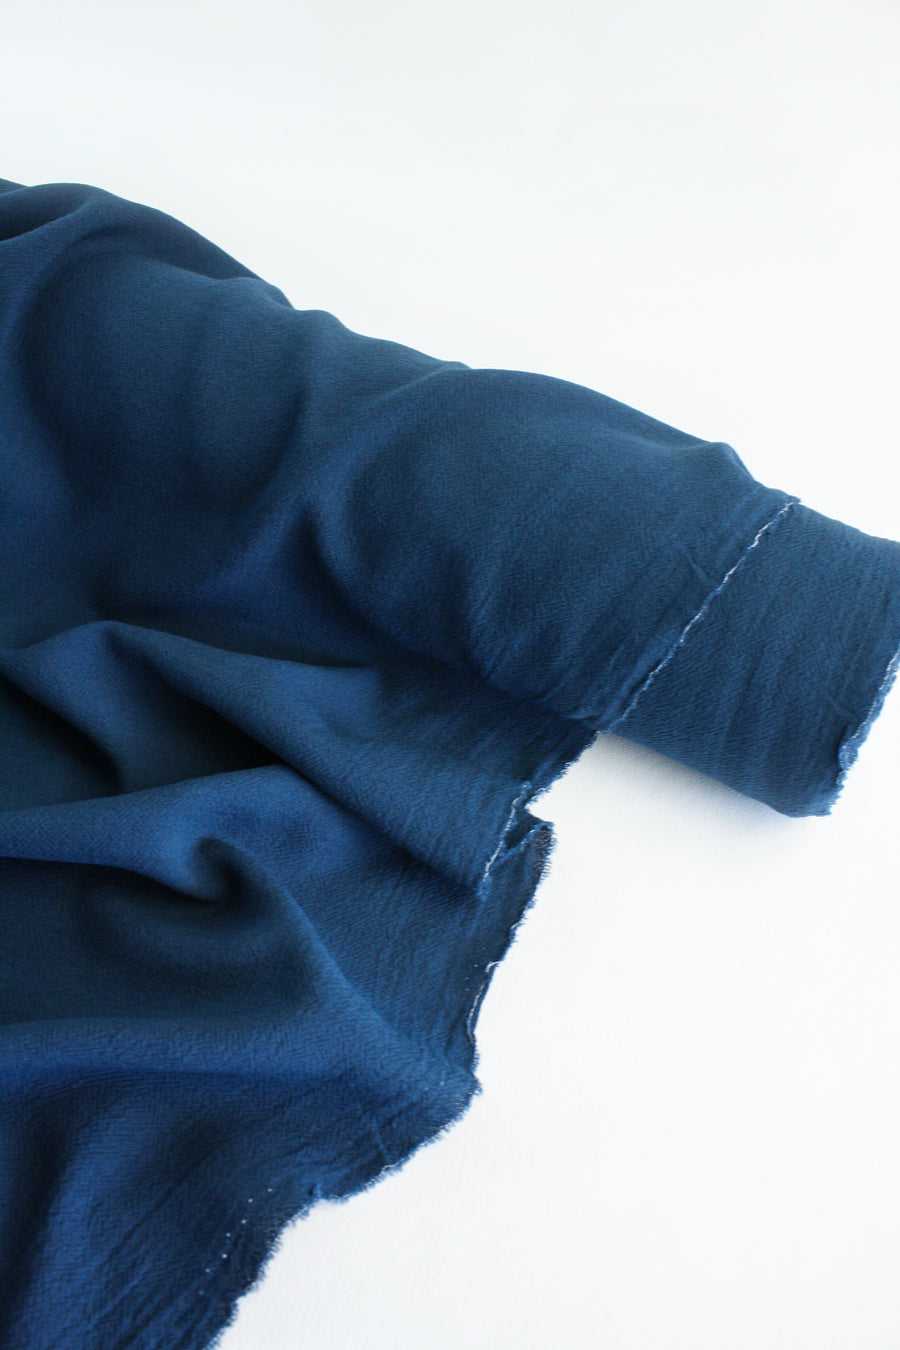 Ottorino - European Wool Crepe | Teal